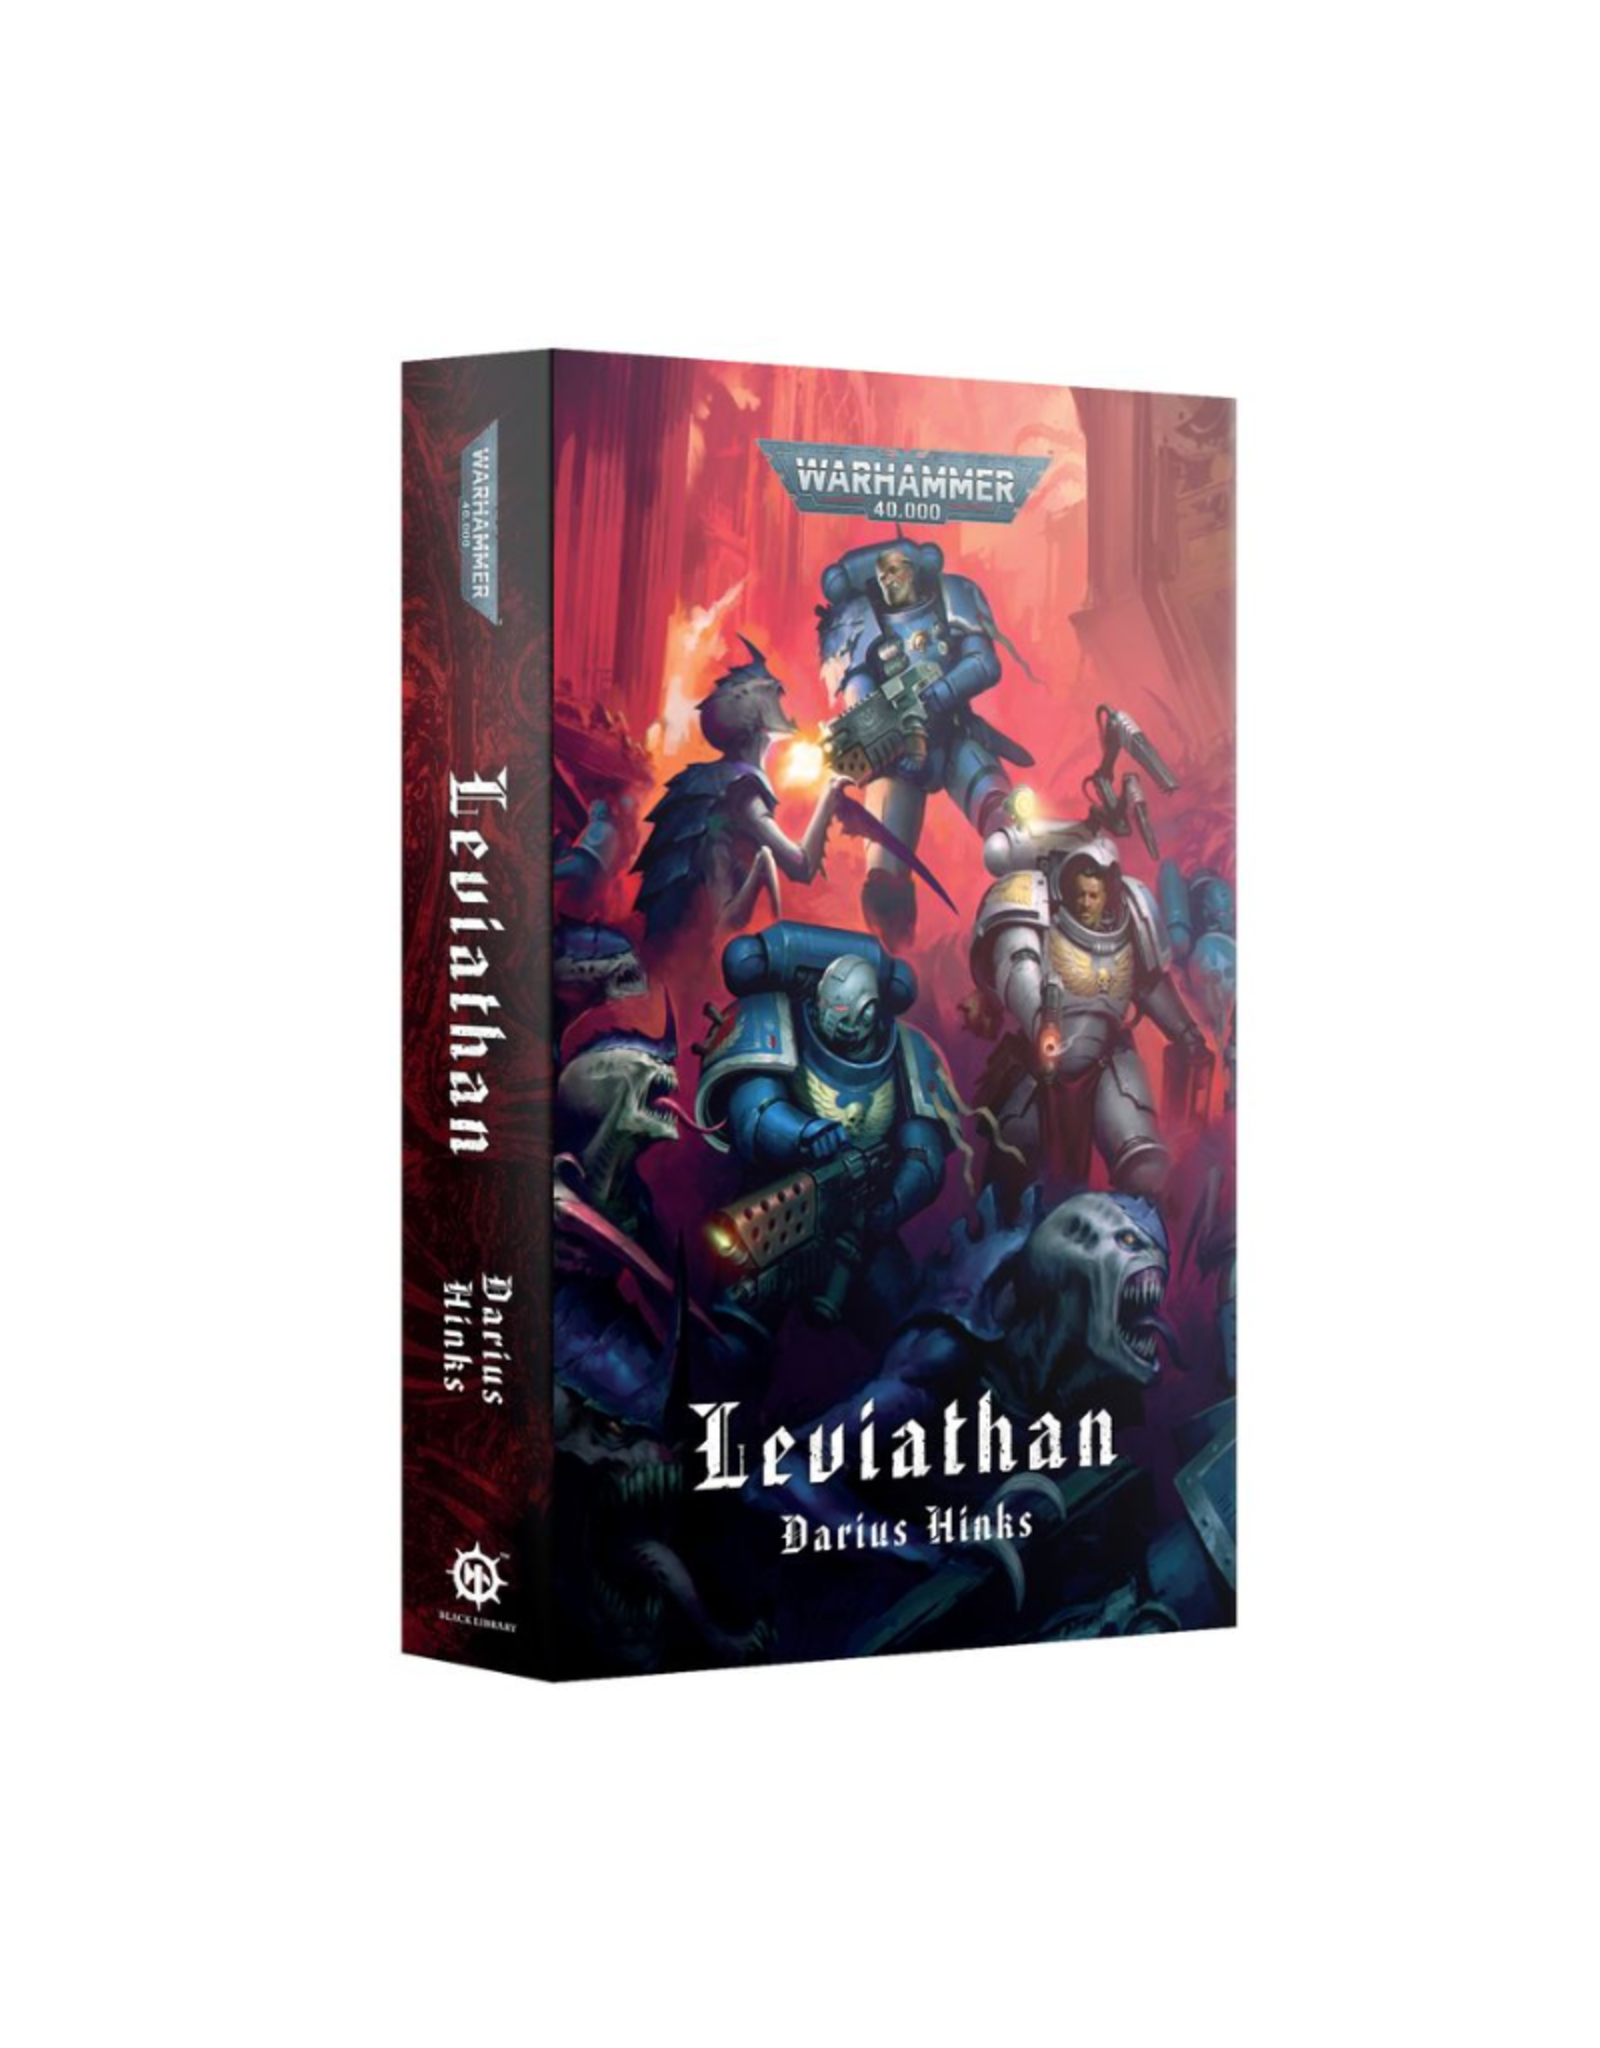 Warhammer 40,000: Leviathan – The Gundam Place Store